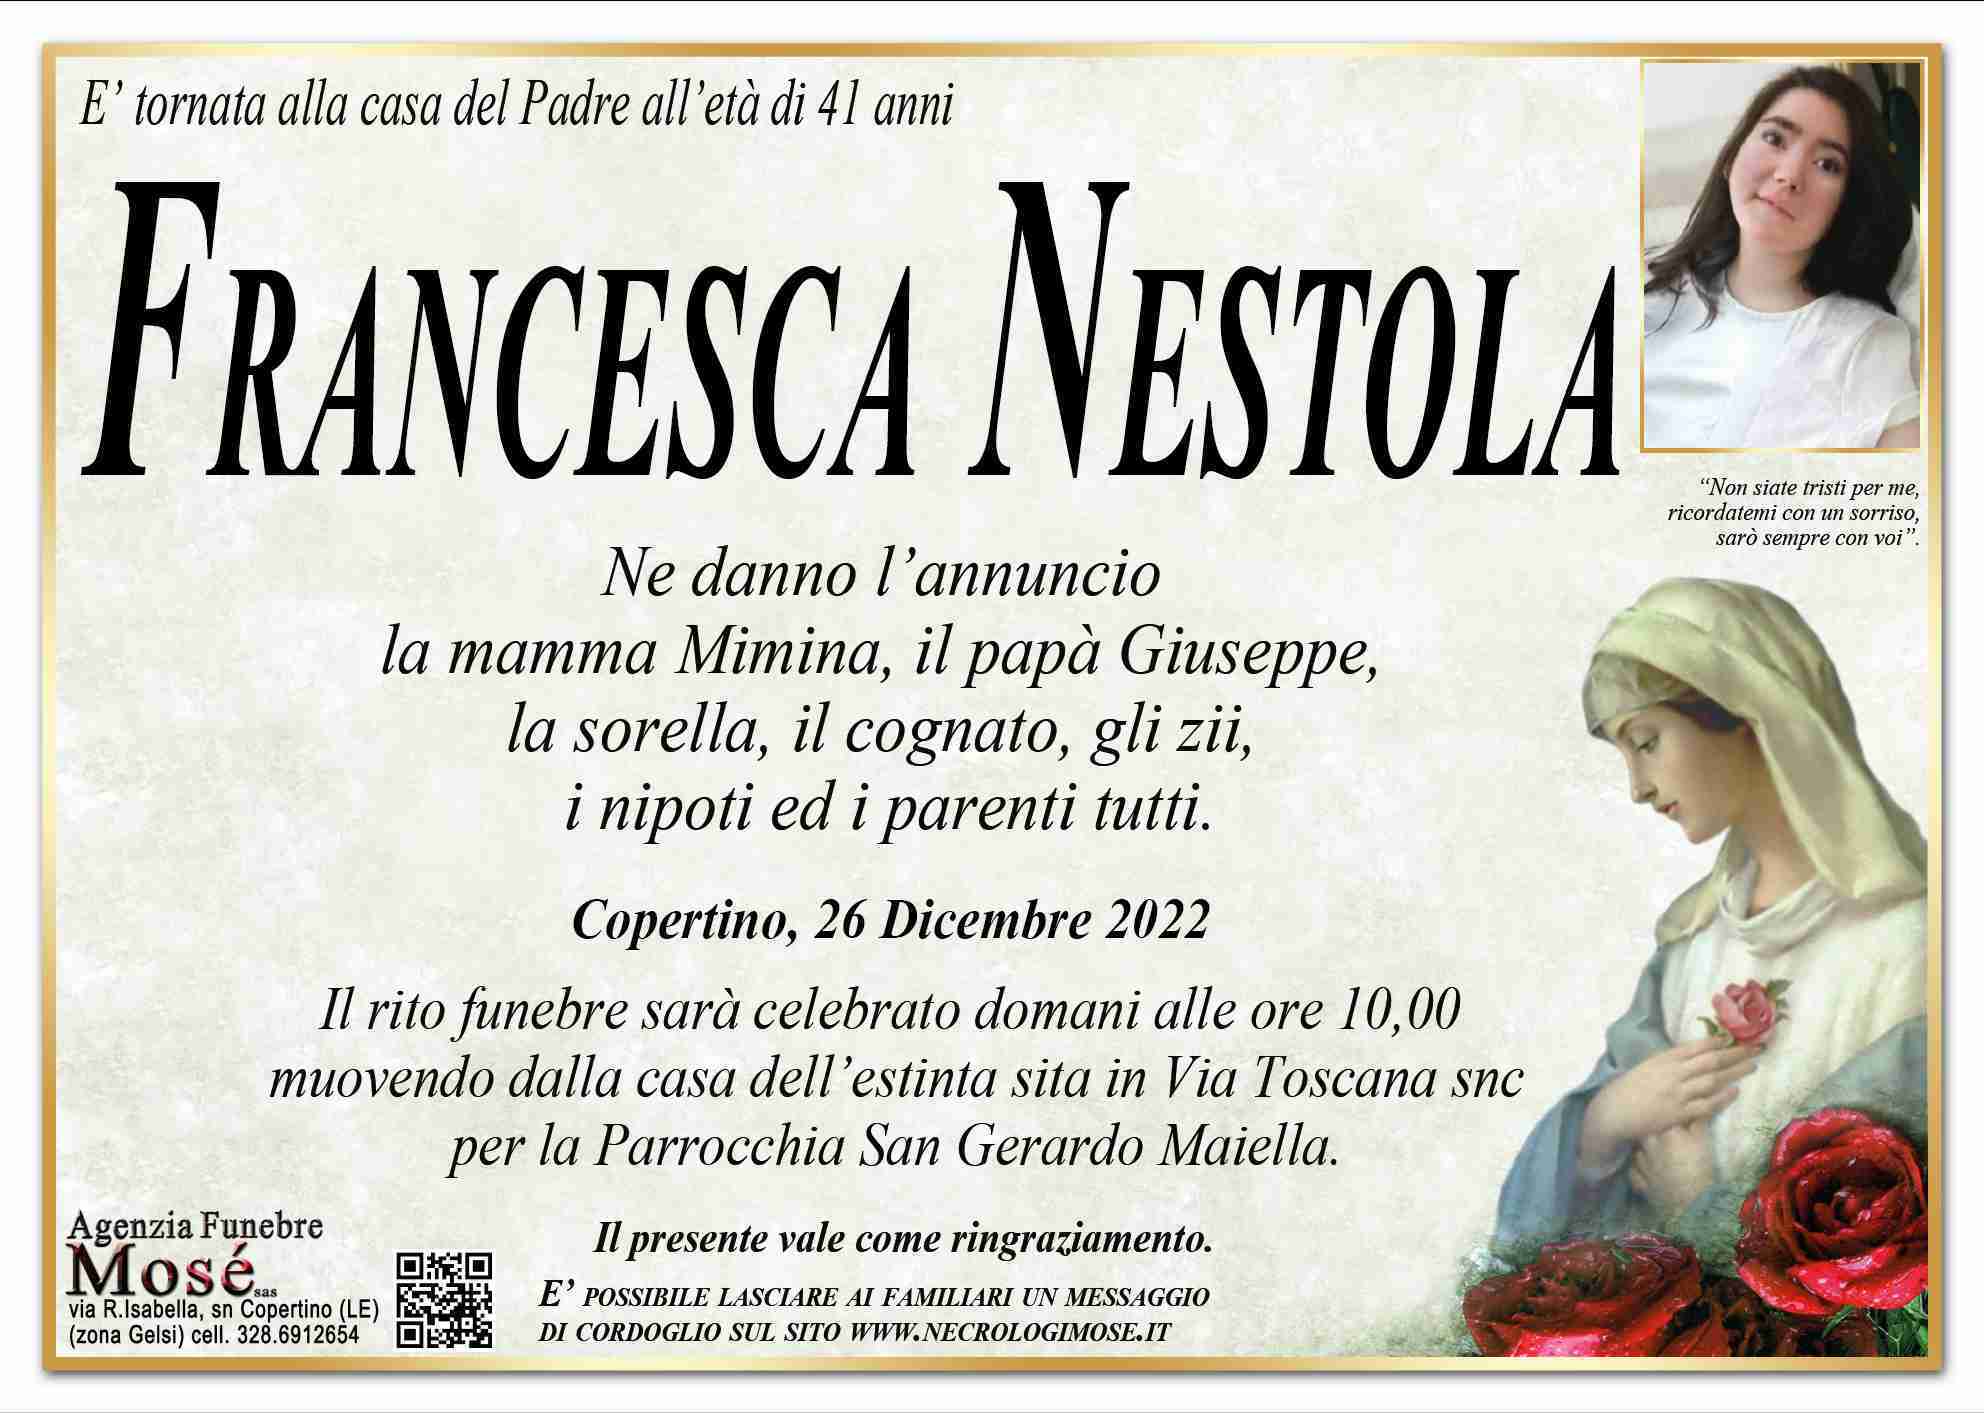 Francesca Nestola